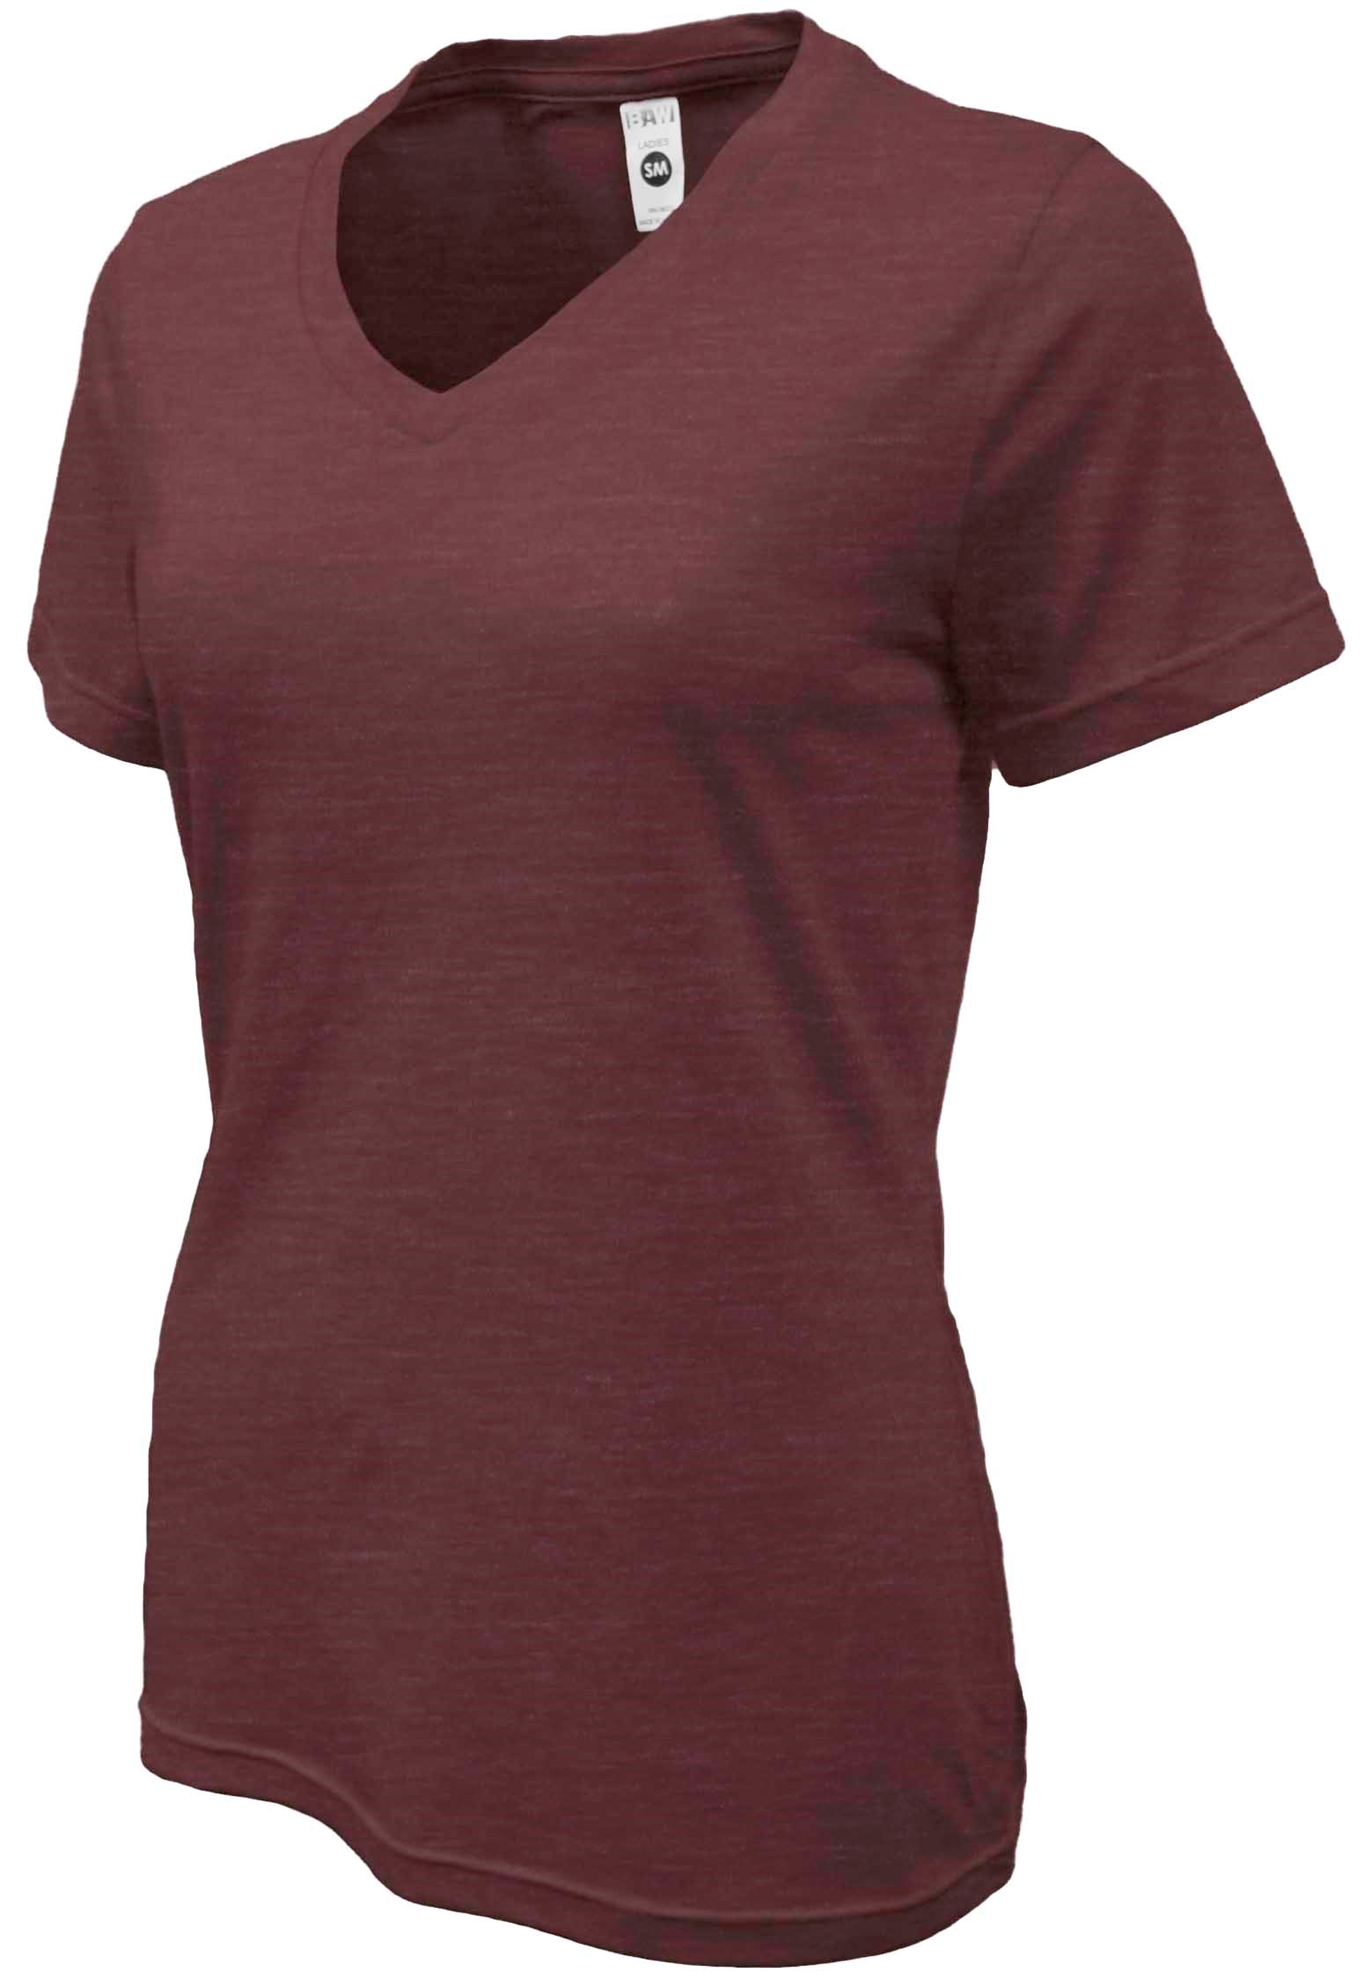 BAW Athletic Wear PC179 - Ladies Soft-Tek Blend V-neck T-Shirt